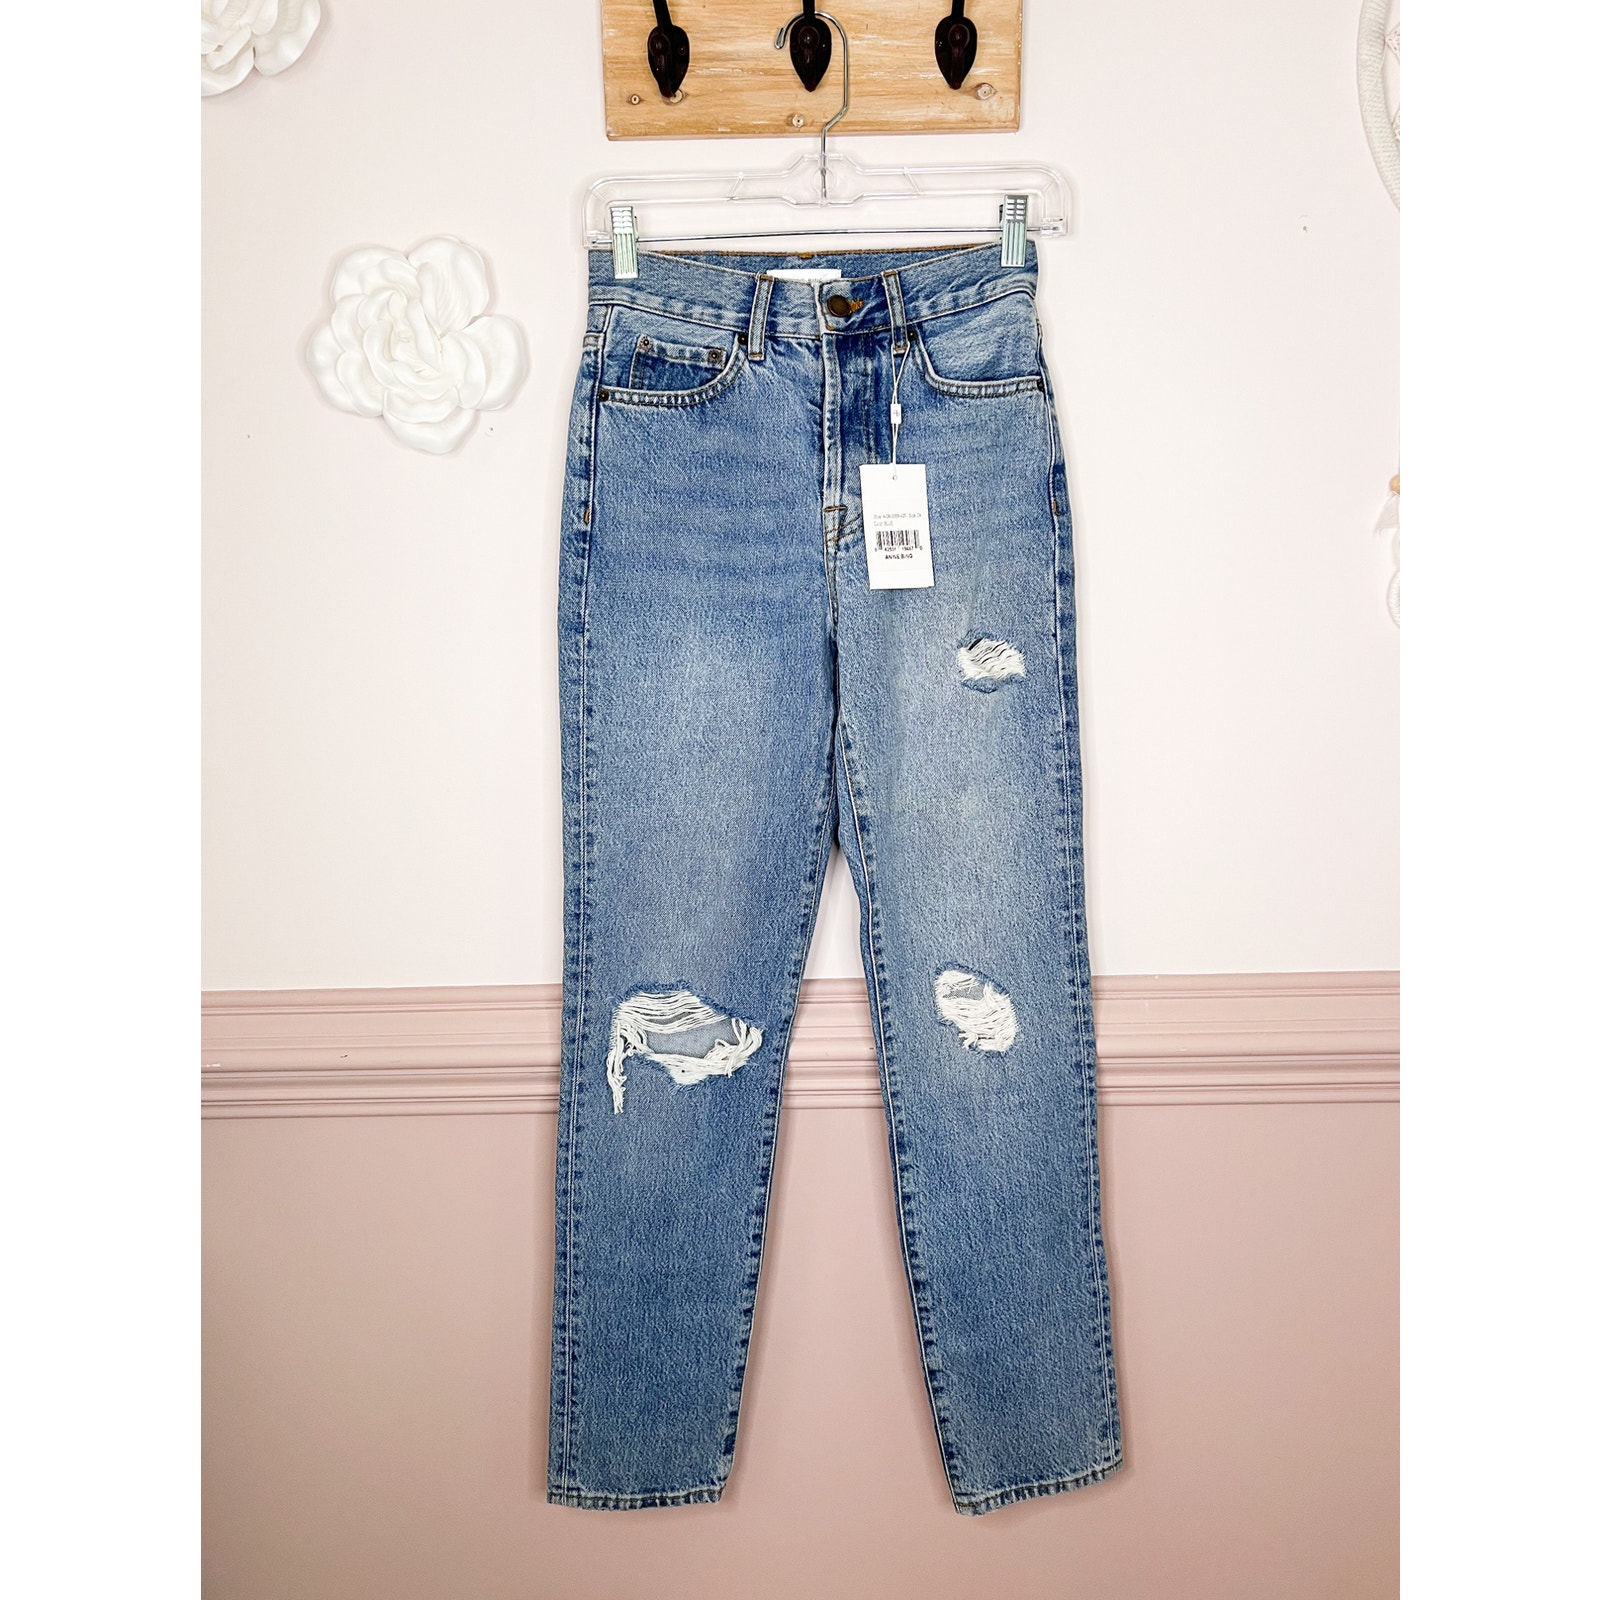 Anine Bing Brenda Jeans Size 24 NWT | eBay